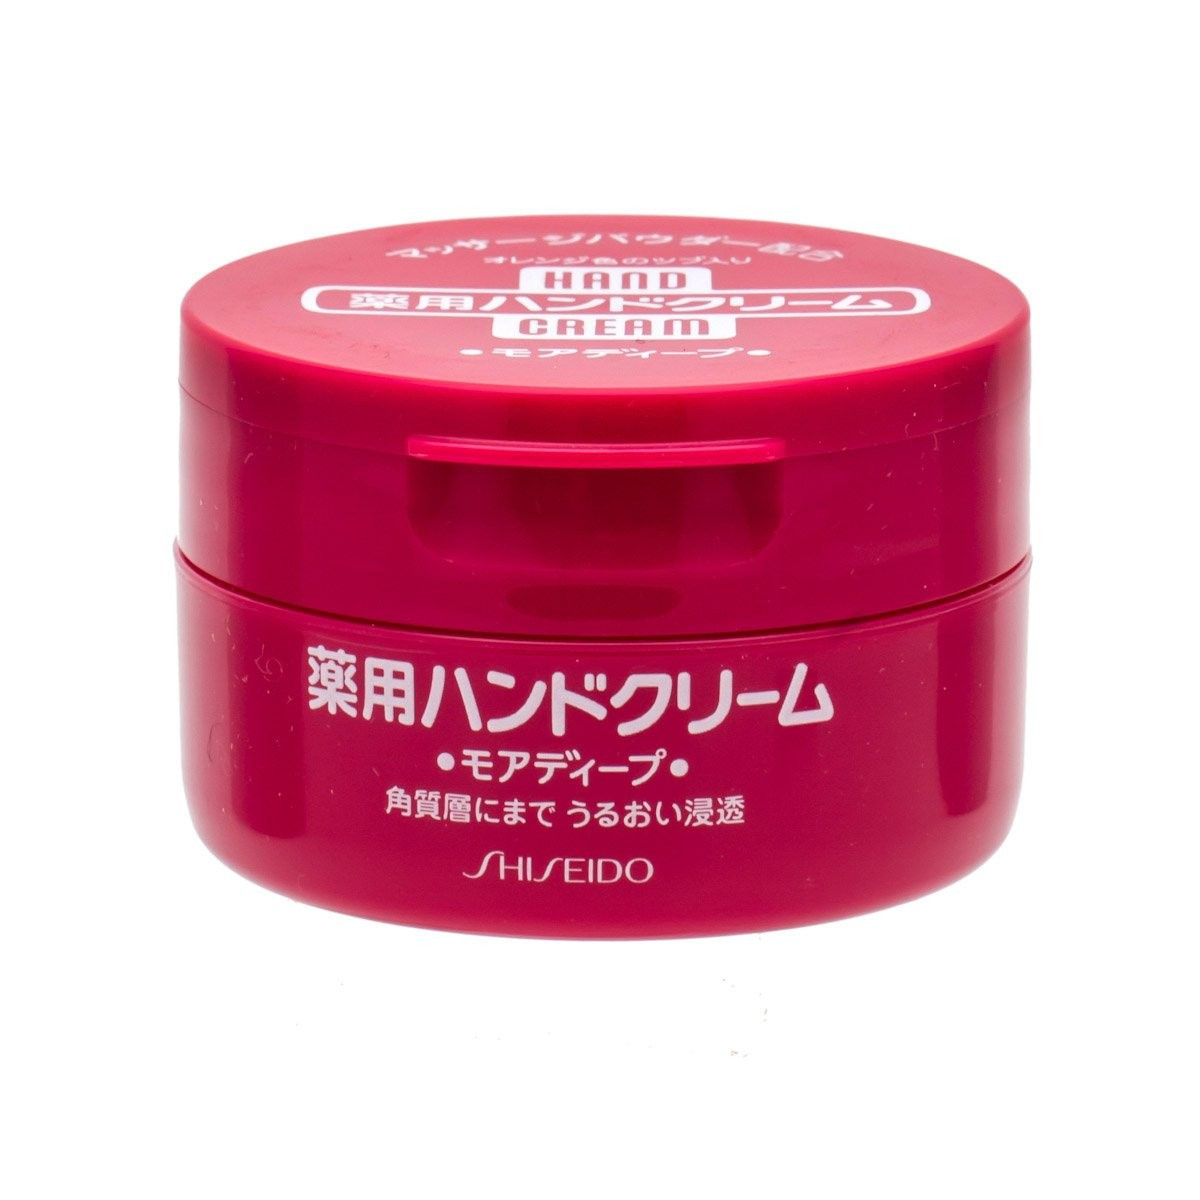 shiseido-urea-hand-cream